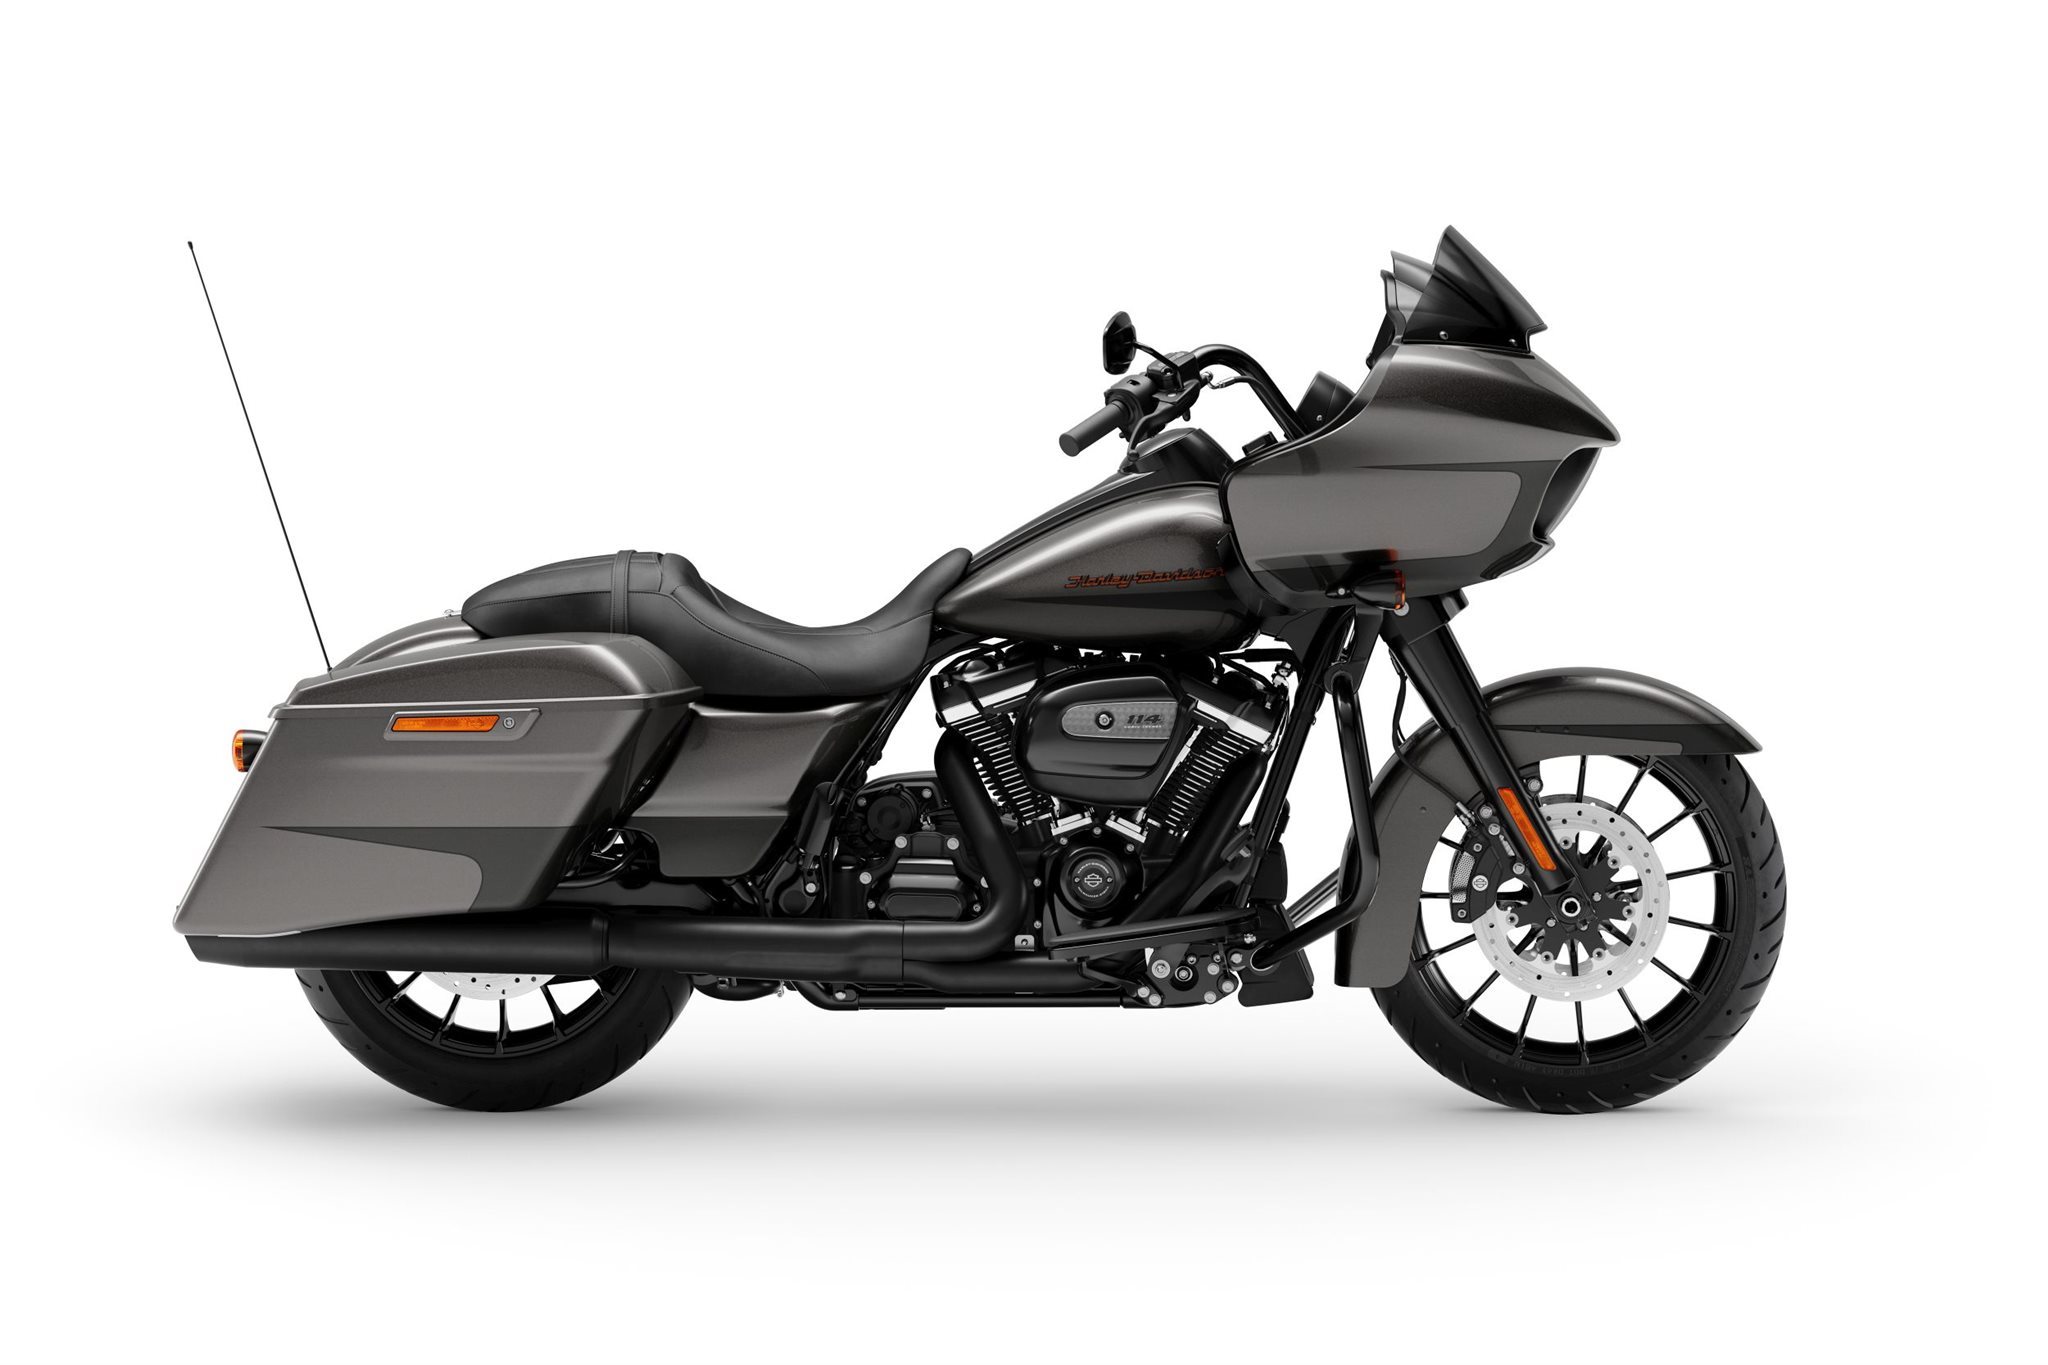 Motorrad Vergleich Harley Davidson Touring Road Glide Special Fltrxs 2020 Vs Indian Challenger Limited 2020